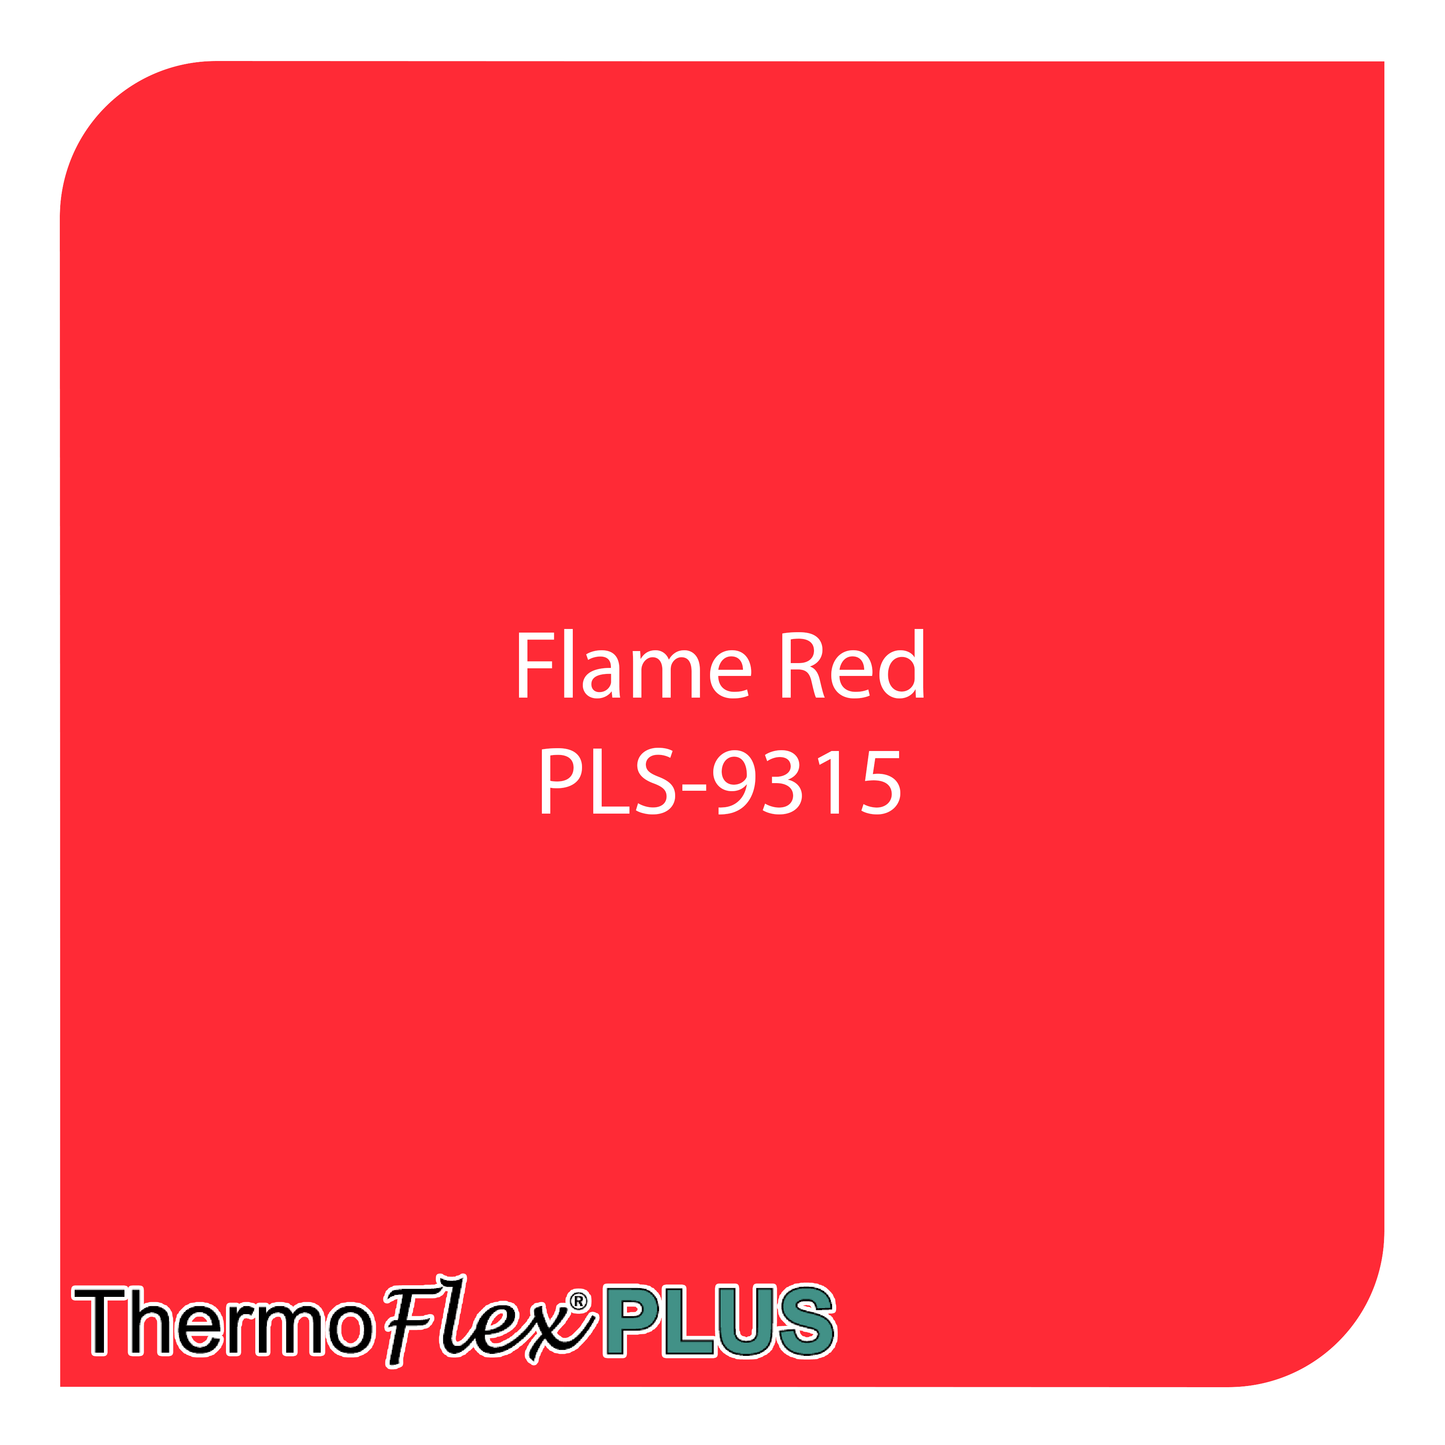 ThermoFlex® Plus - 12" x 5' Feet - 10 Rolls